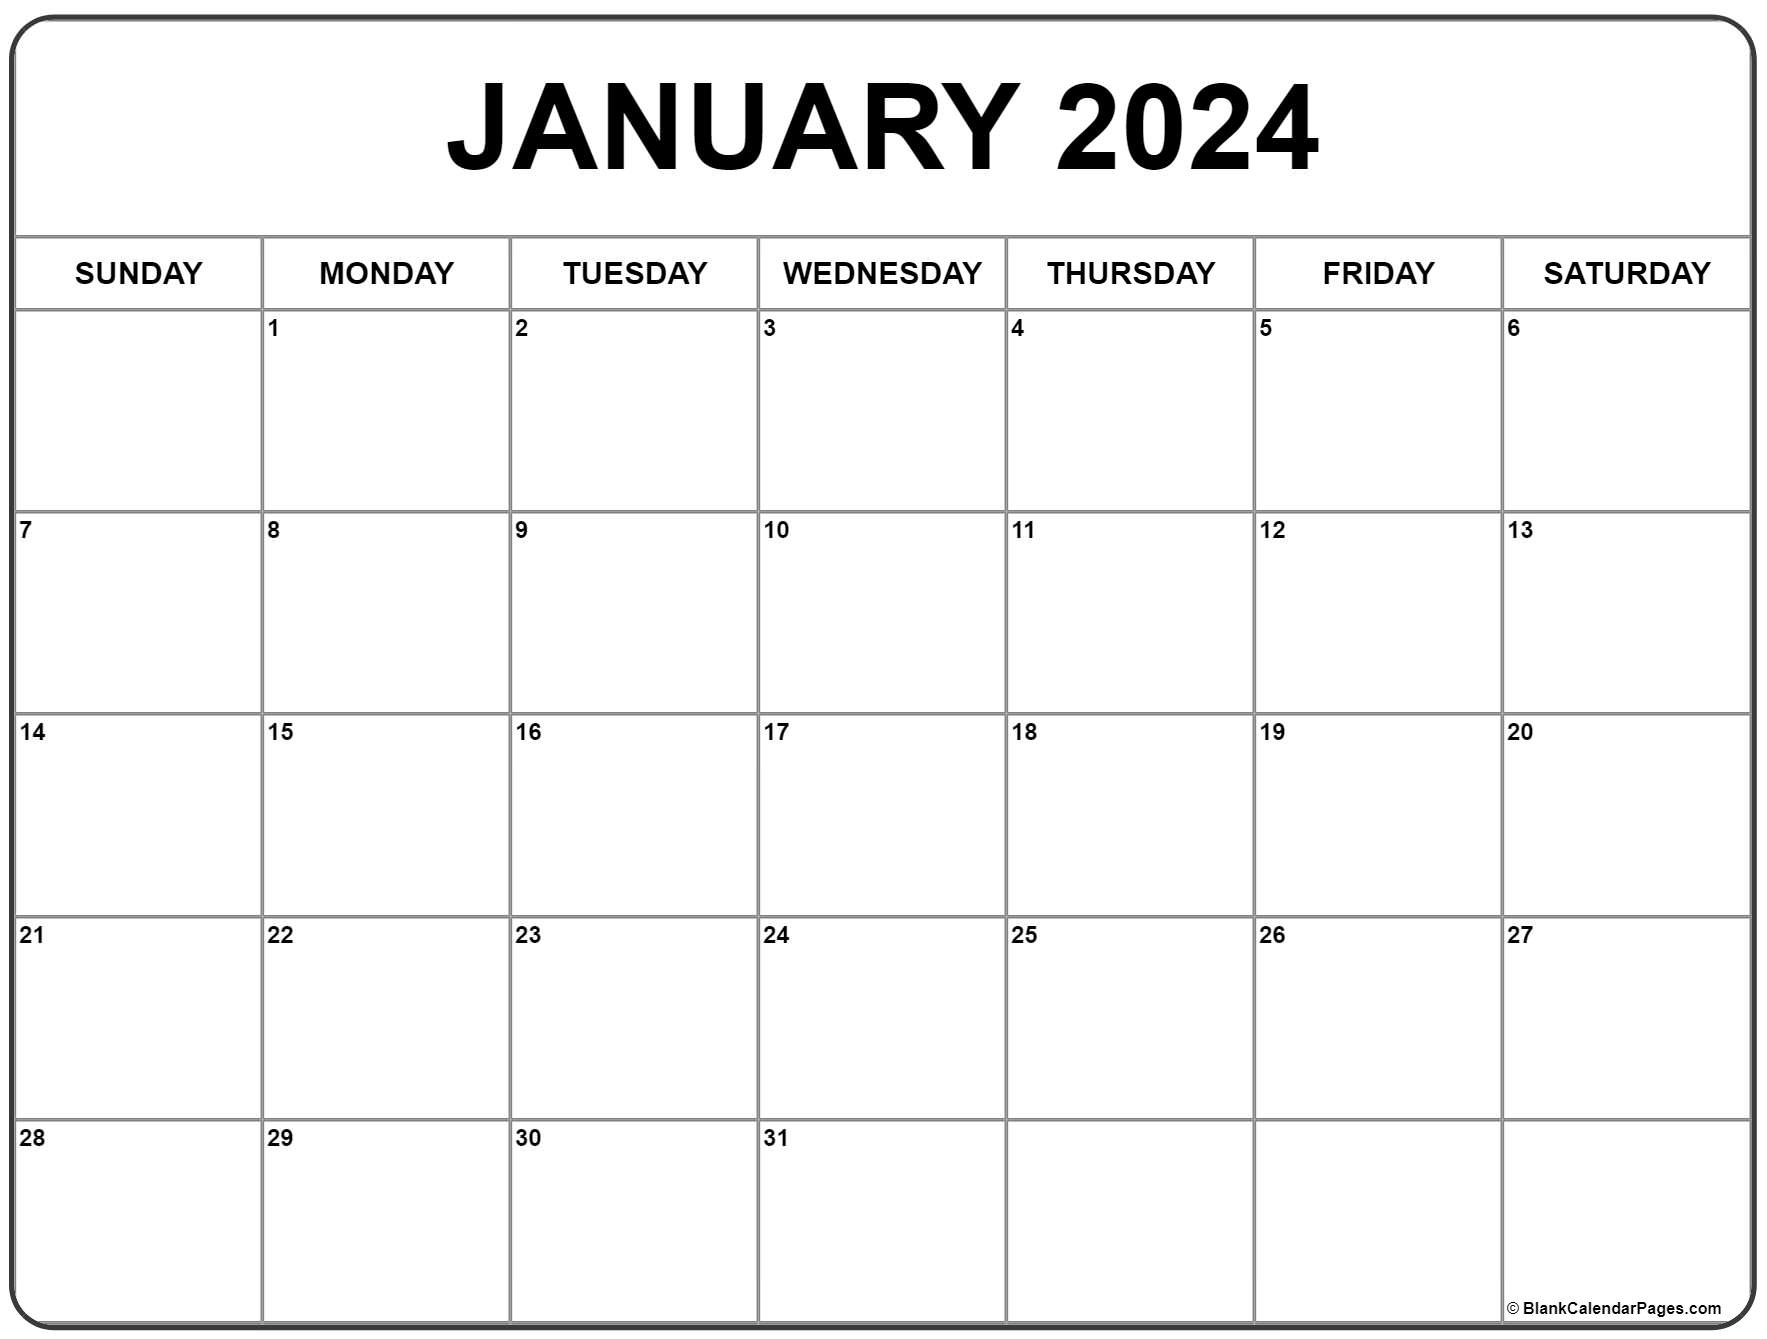 January 2024 Calendar | Free Printable Calendar for Free January Calendar 2024 Printable